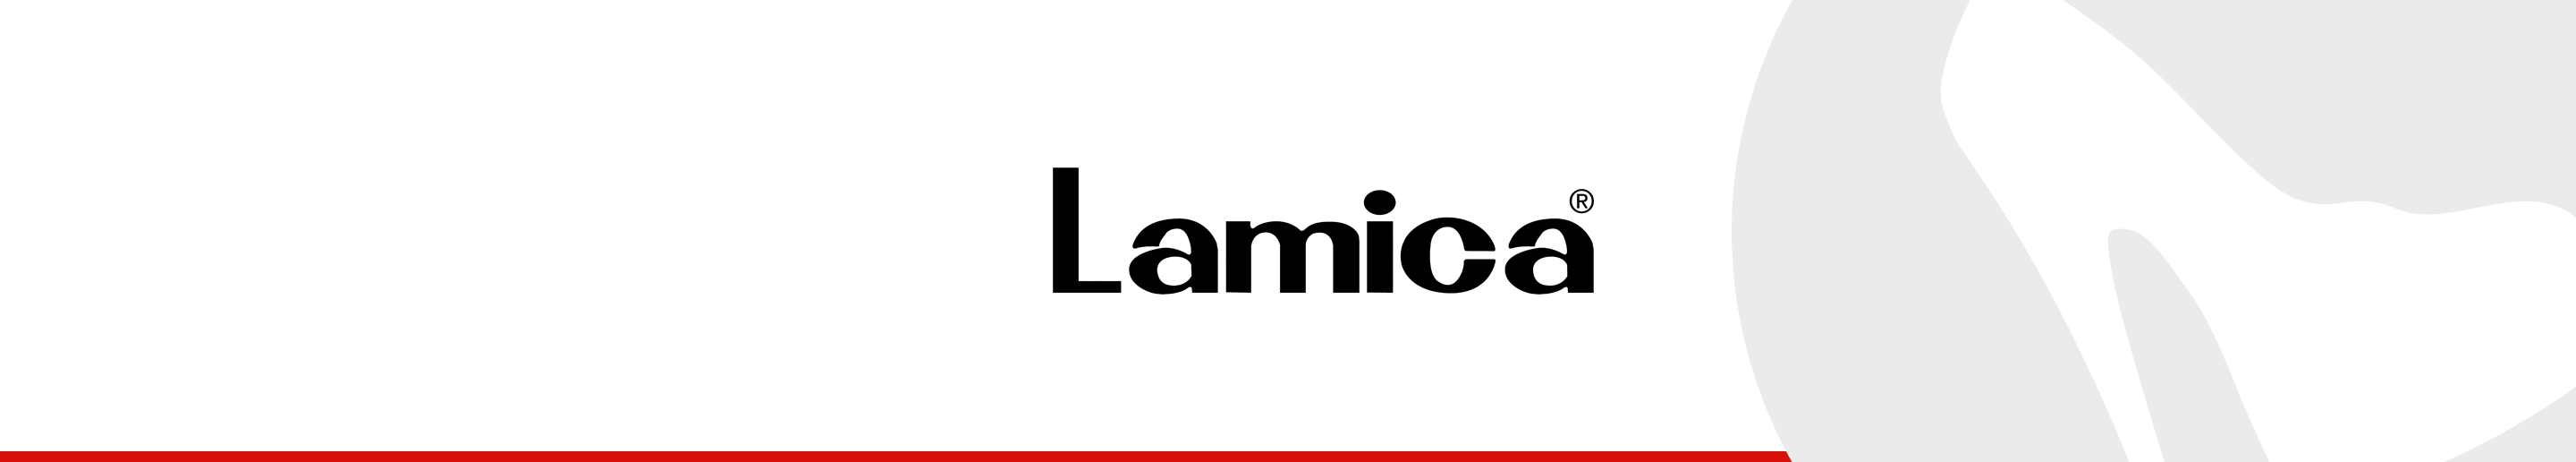 Lamica_header